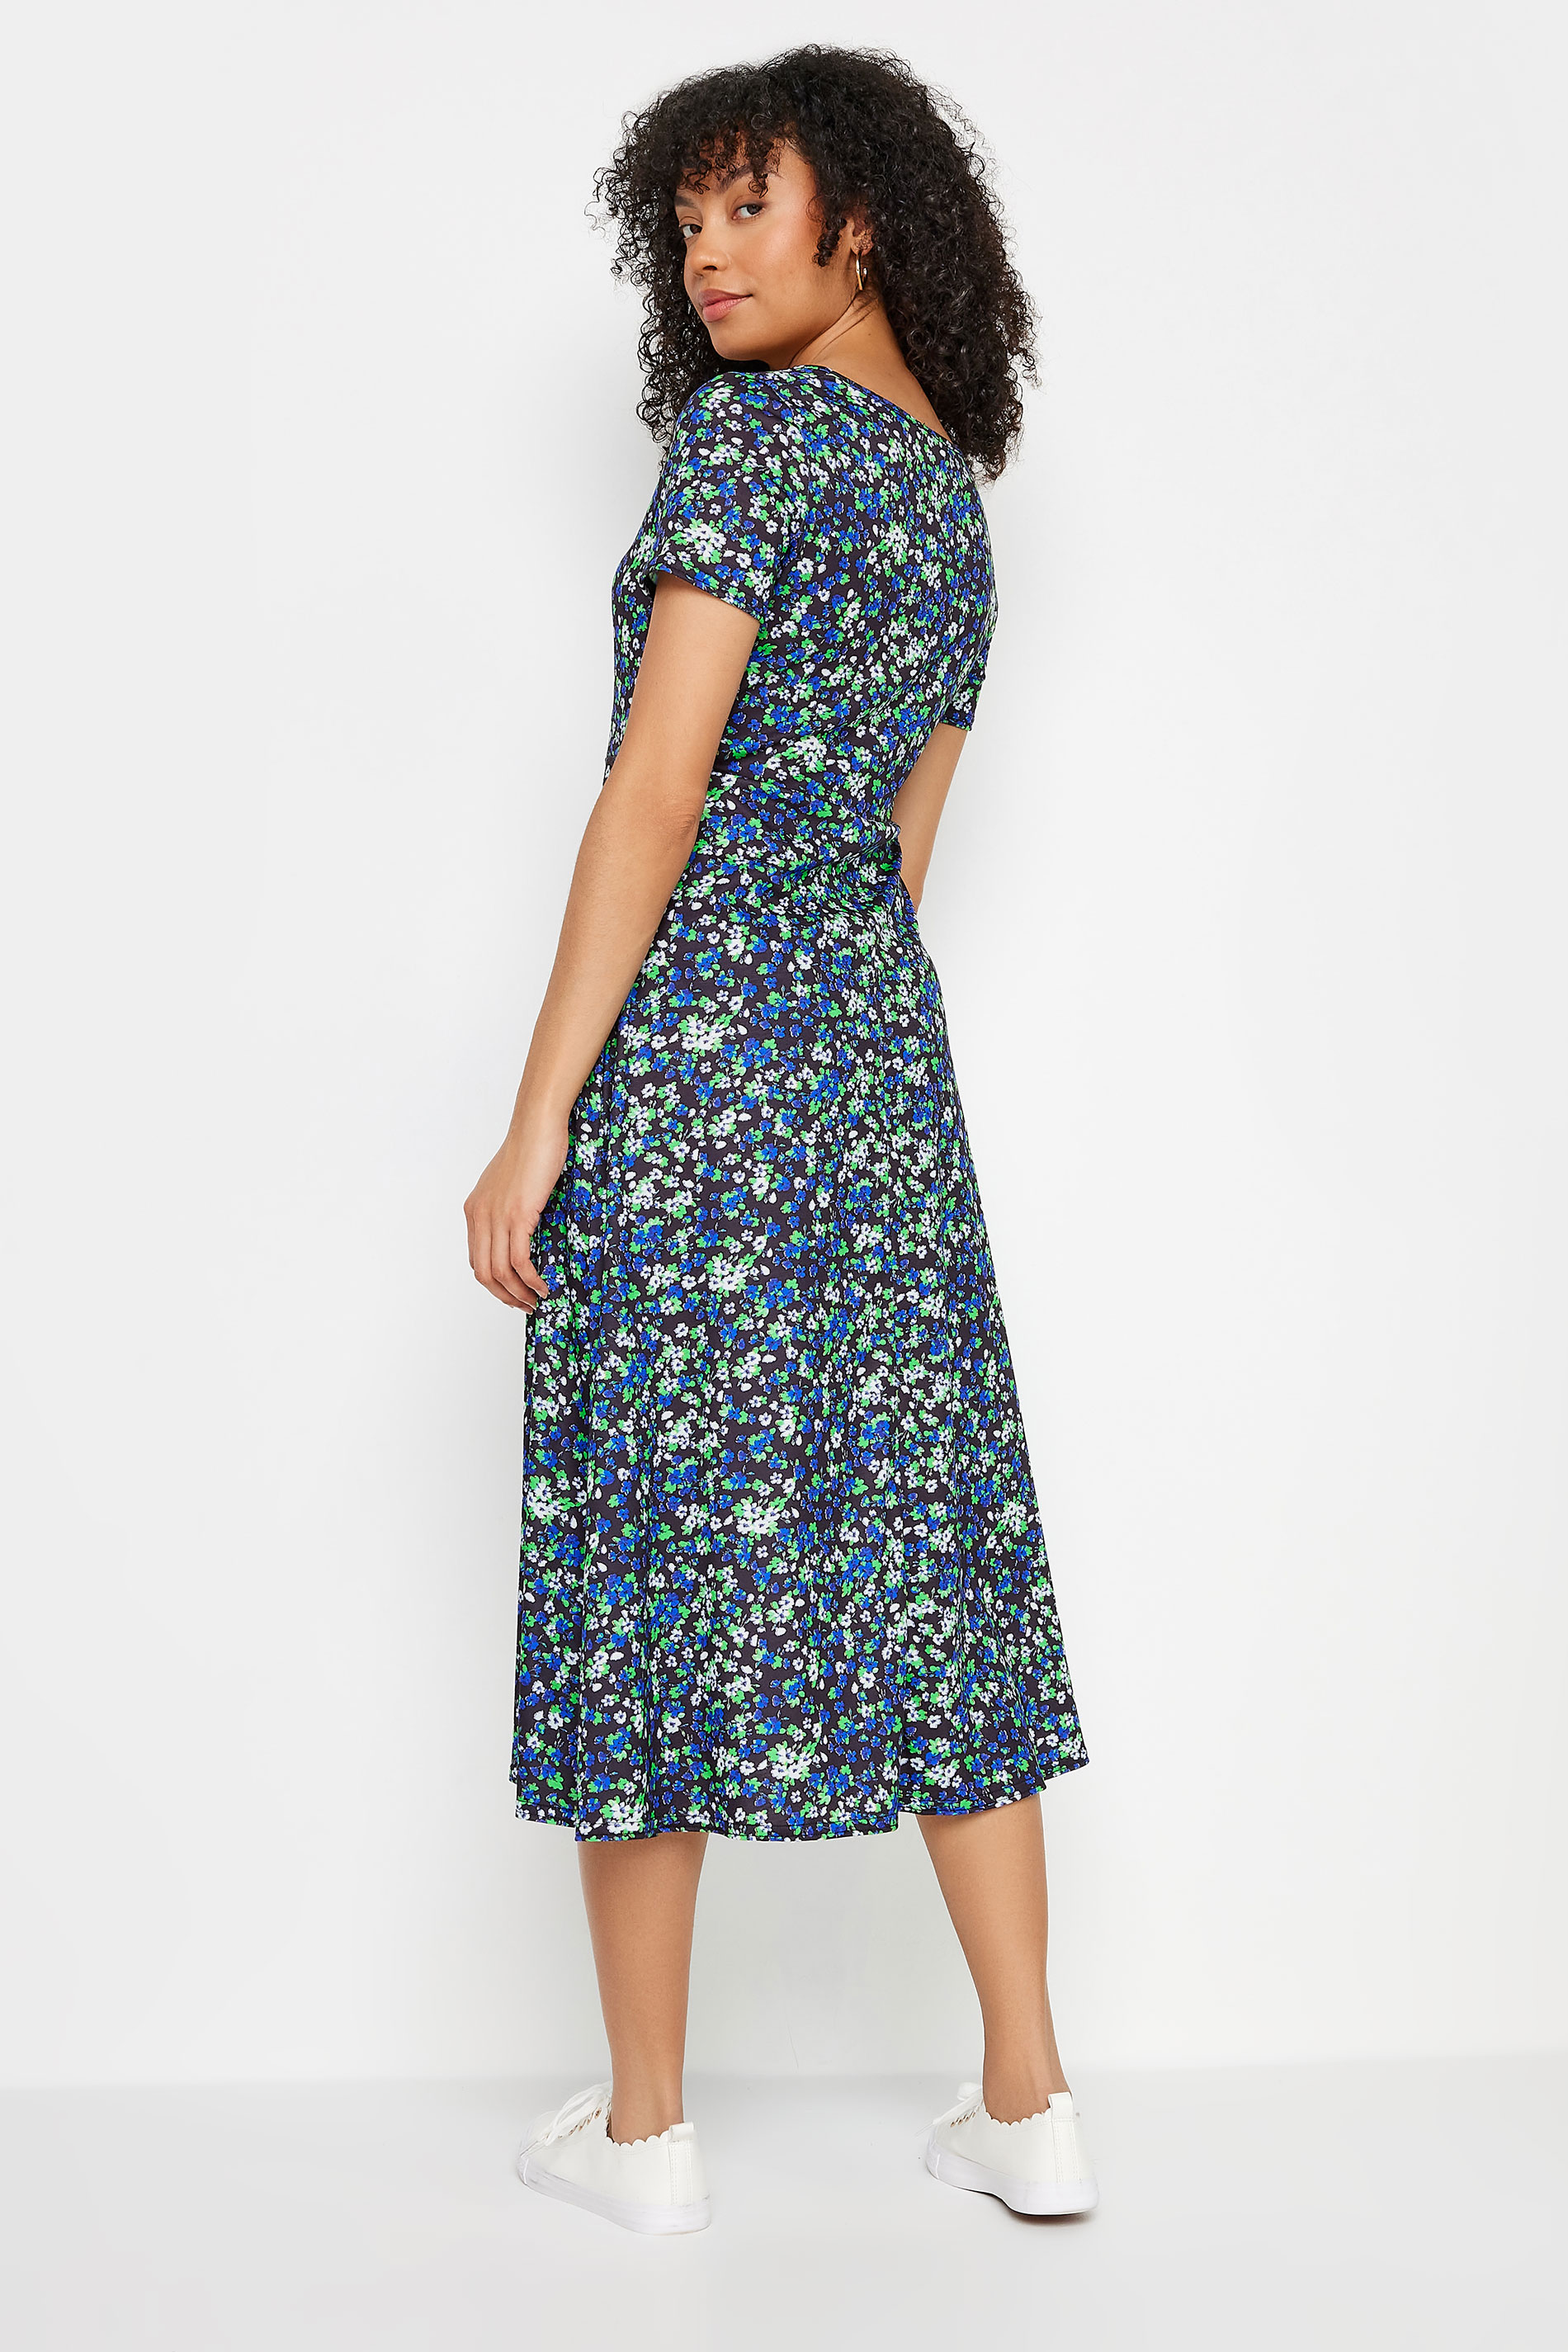 M&Co Black & Blue Floral Ditsy Print Dress | M&Co 3